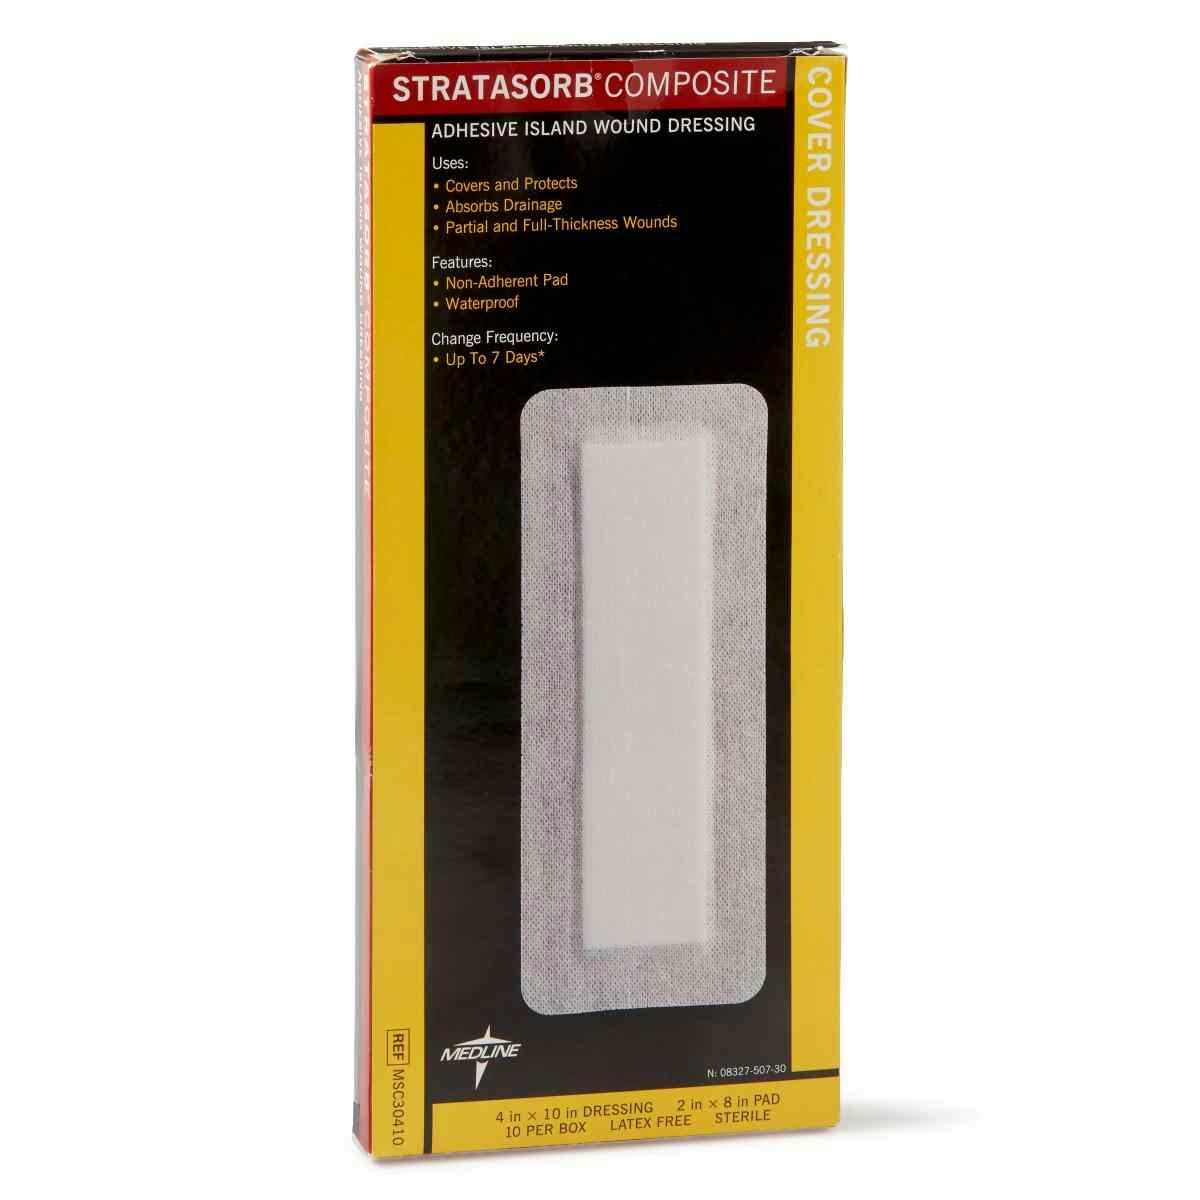 Medline Stratasorb Composite Adhesive Island Wound Dressings, MSC30410Z, 4" X 10" - Box of 10